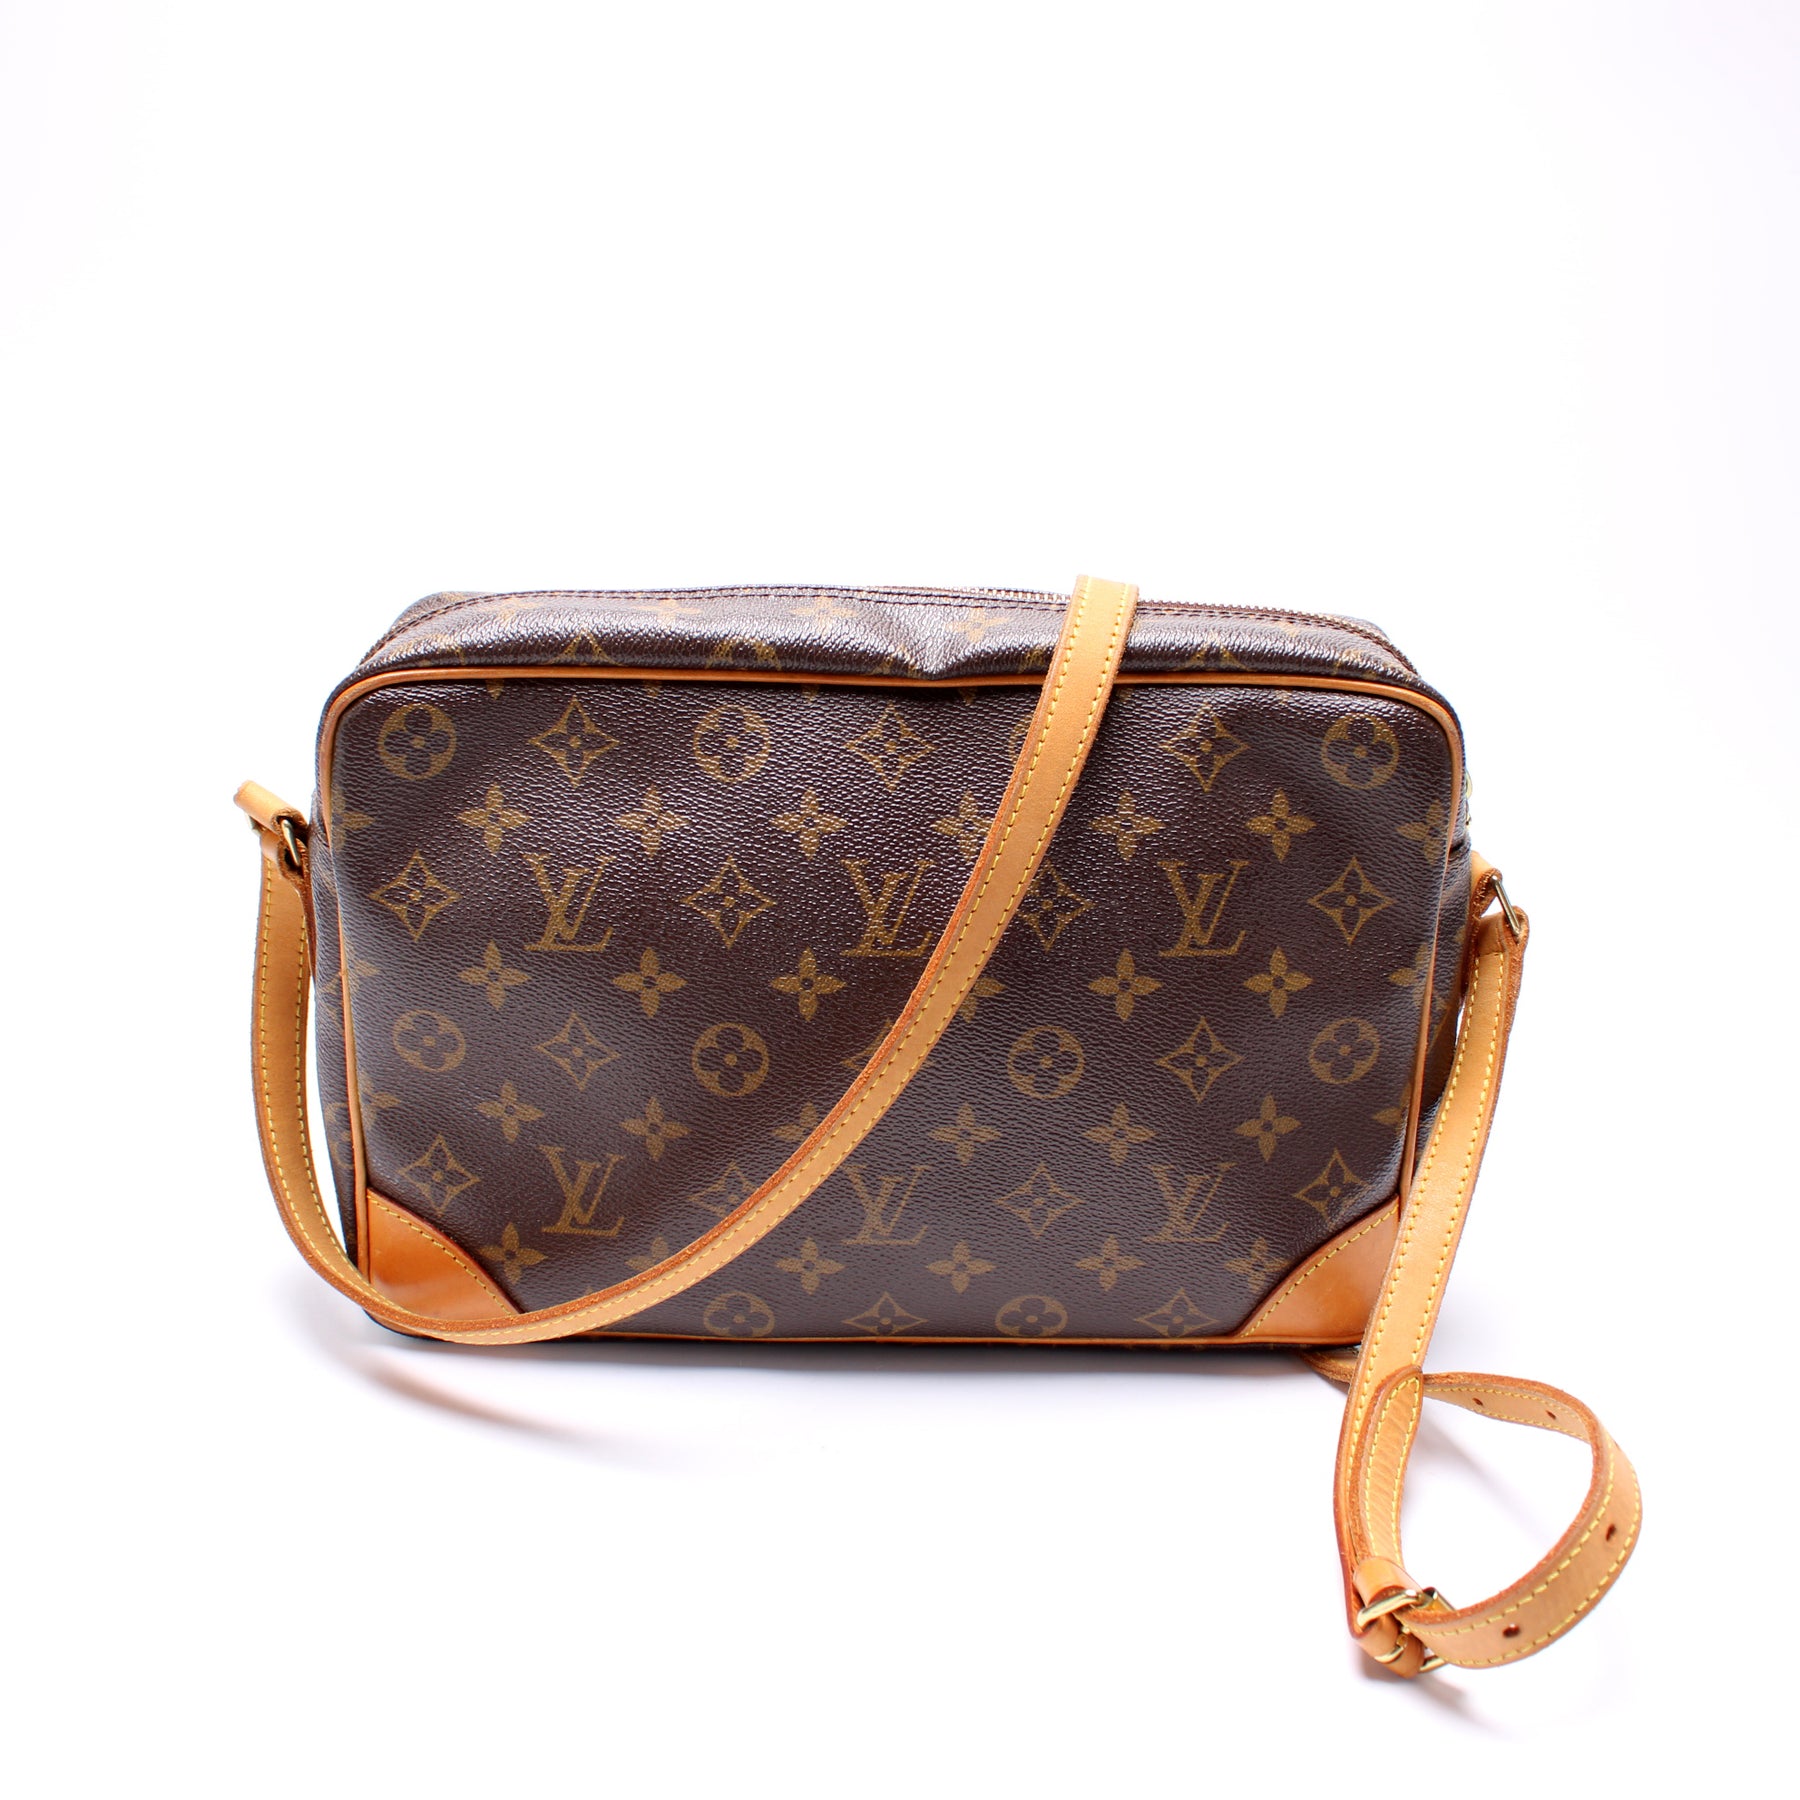 Used Auth Louis Vuitton shoulder bag monogram Trocadero 30 M51272 